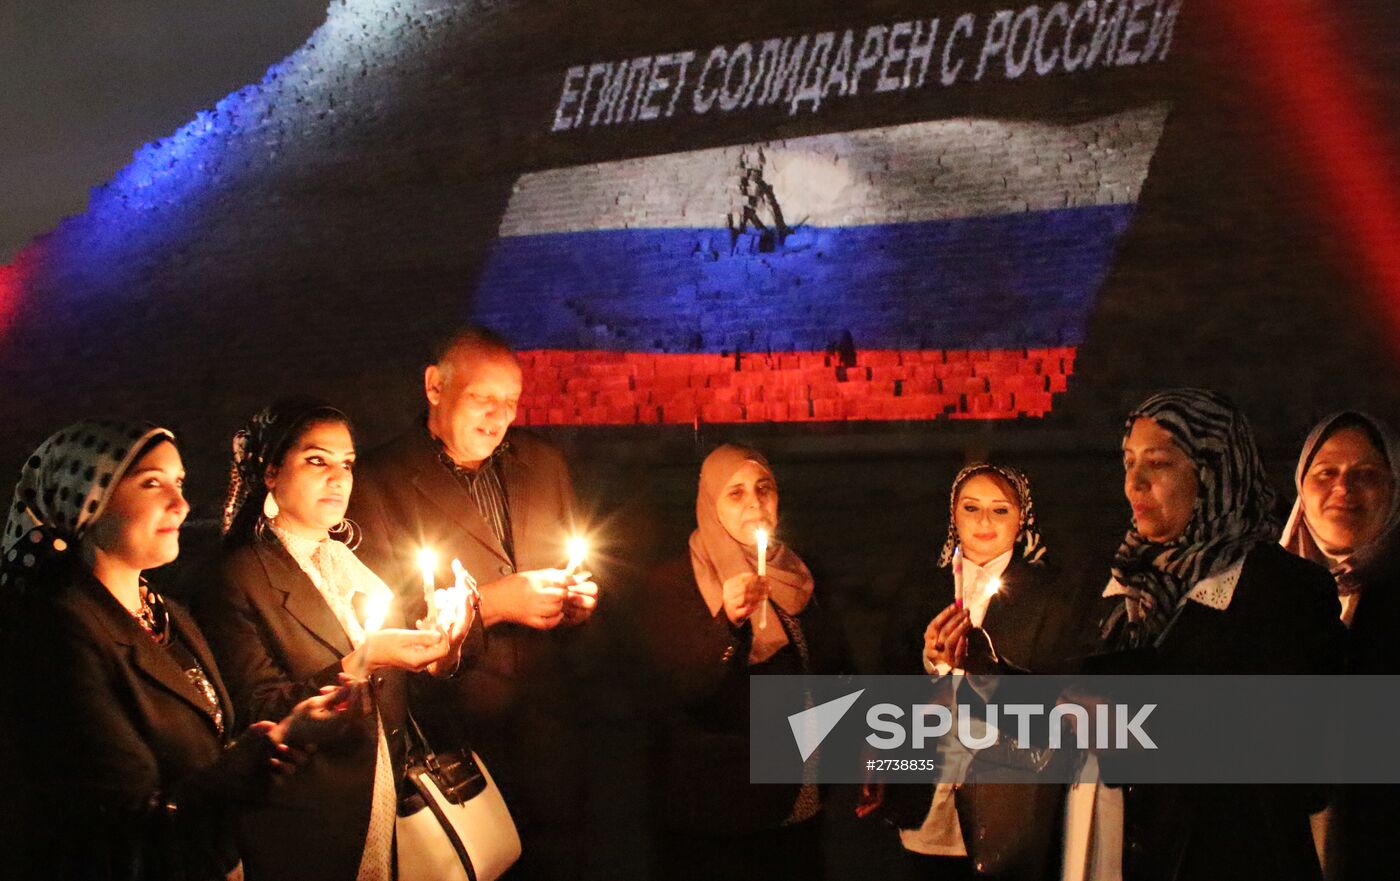 Memorial event for victims of Russian A321 crash and Paris terrorist attacks